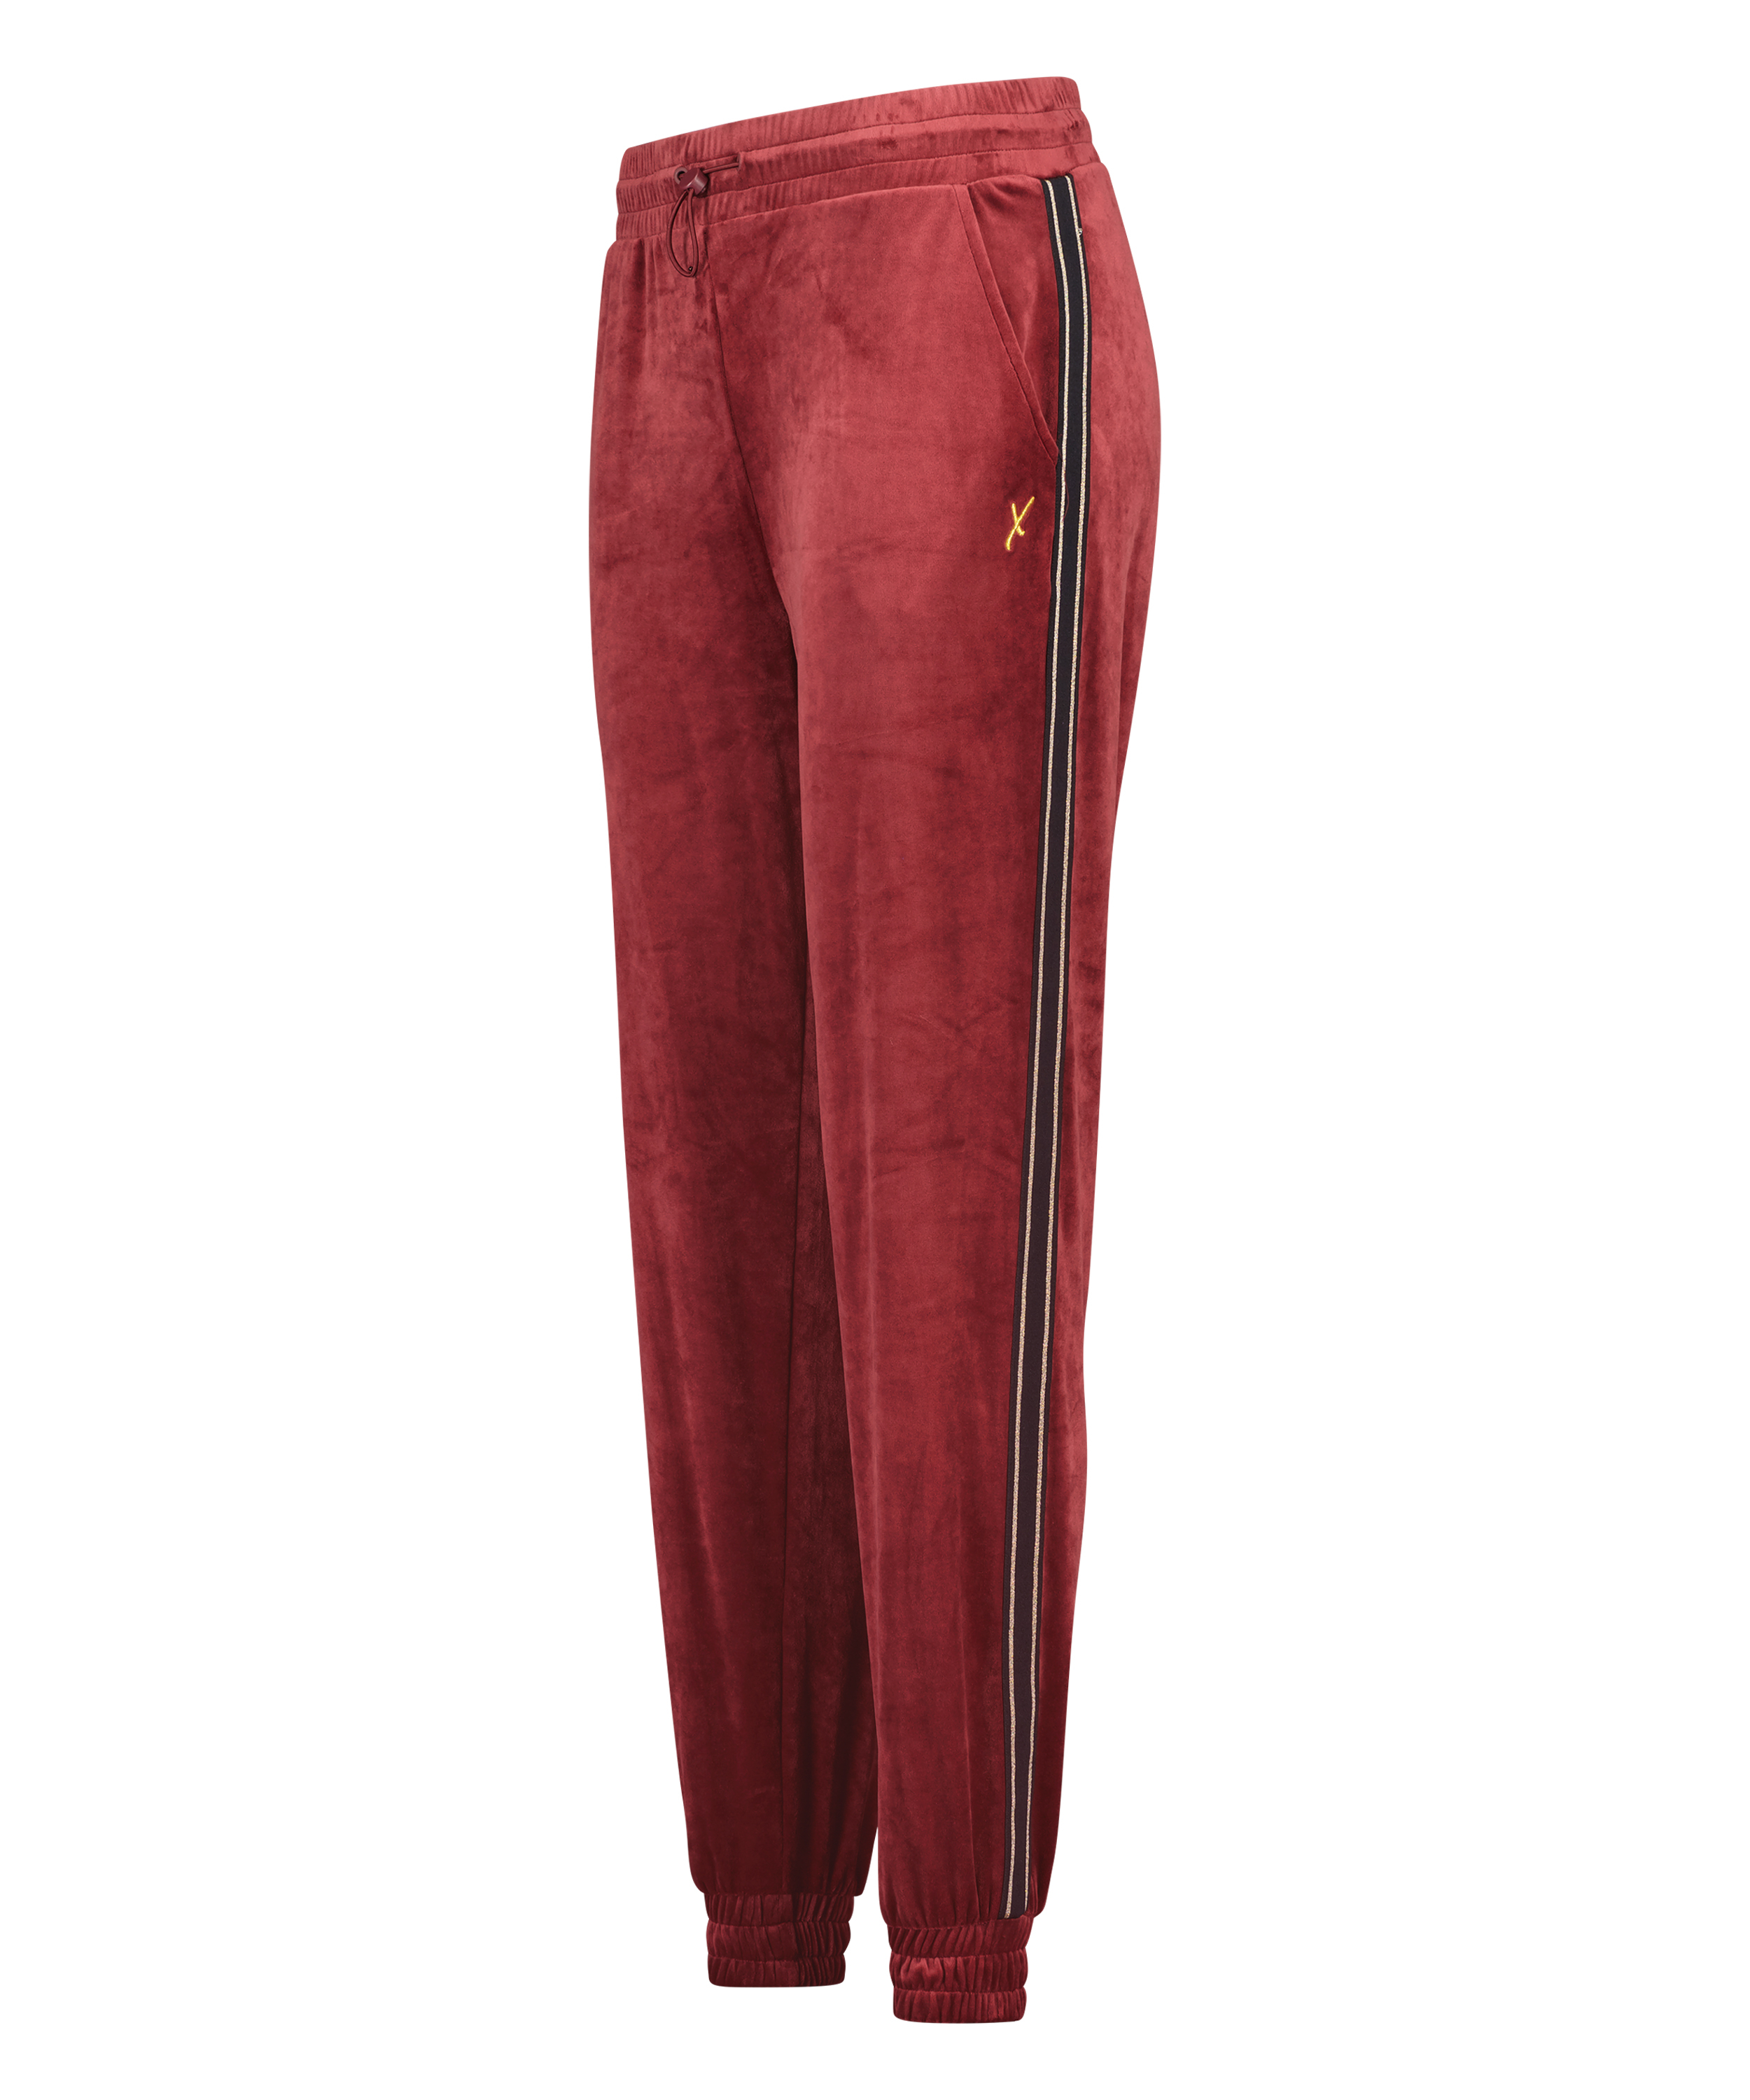 Pantalon de sport Velours HKMX, Rouge, main